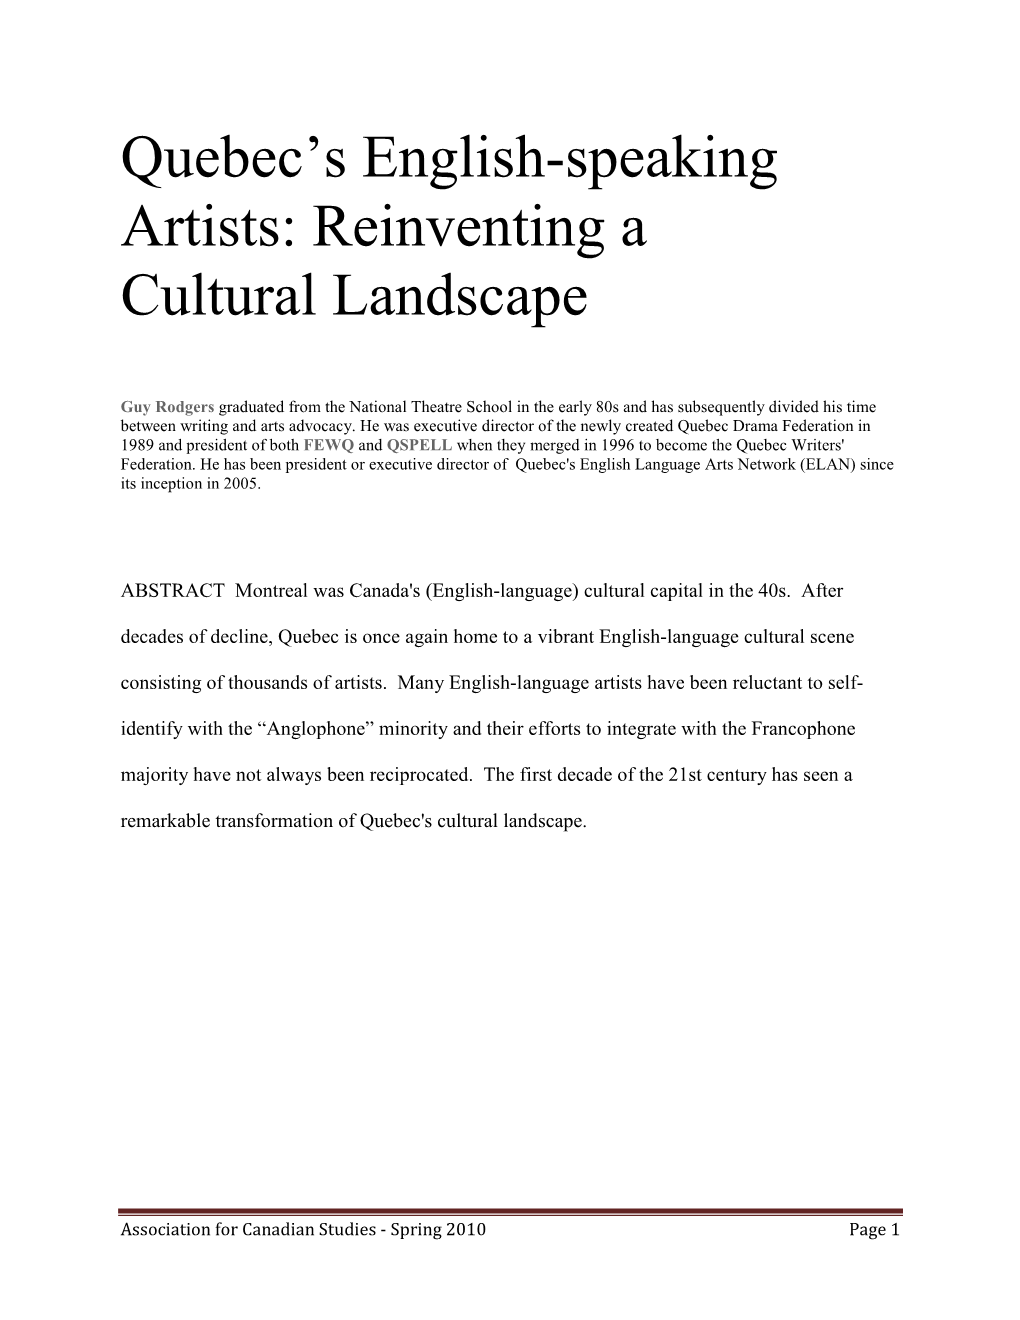 Reinventing a Cultural Landscape